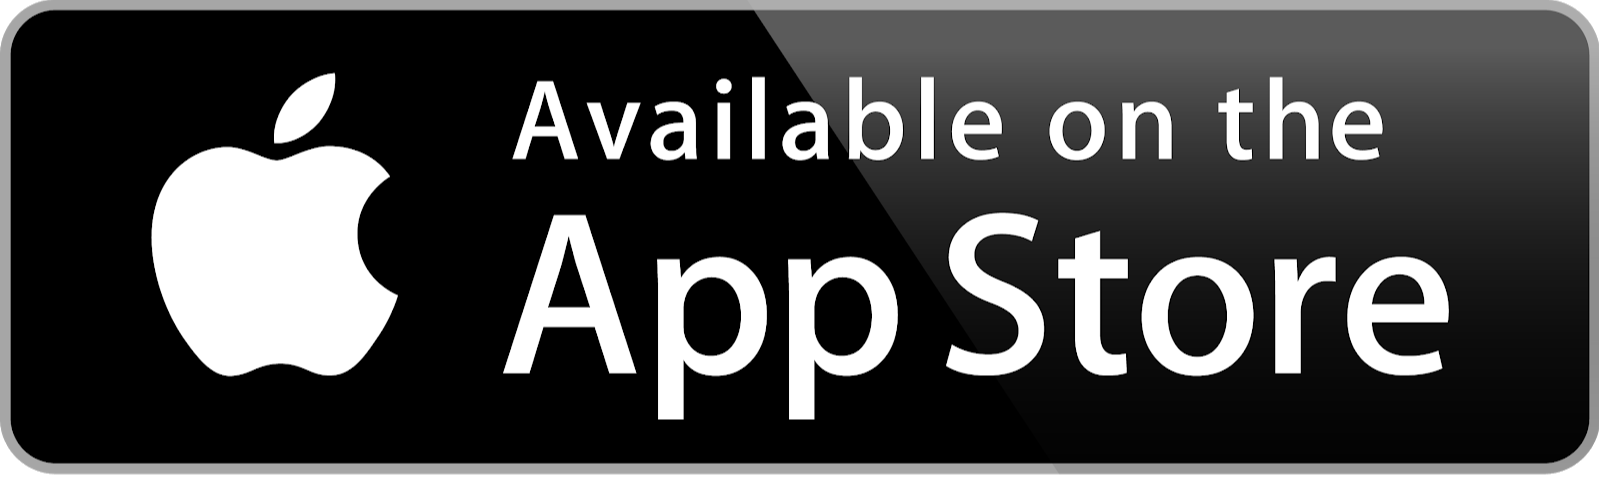 Apple App Store Button